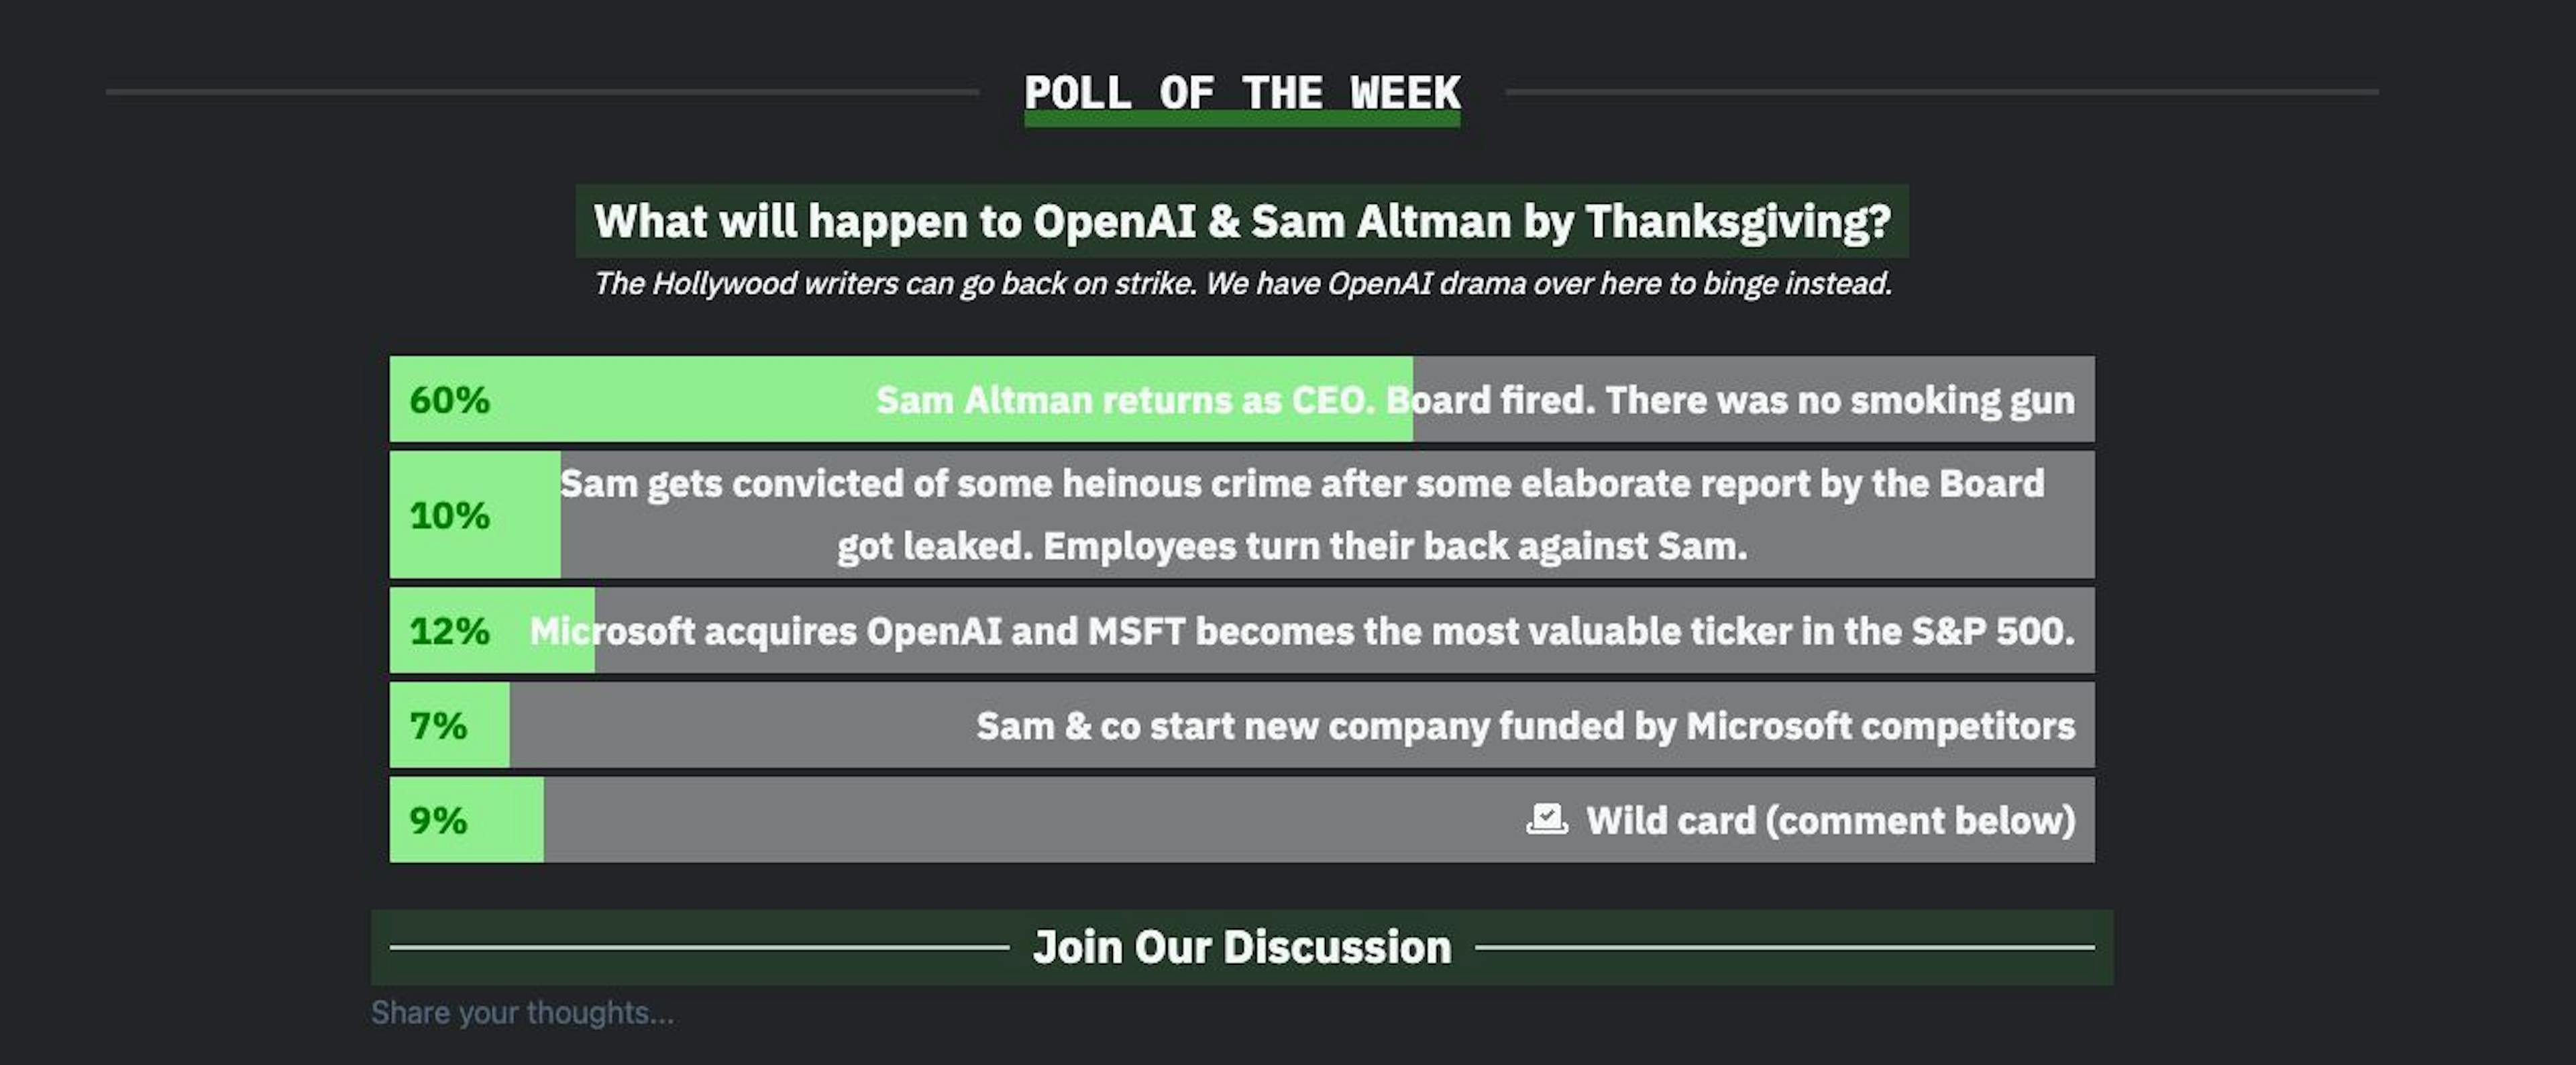 enlace a la encuesta aquí: https://hackernoon.com/polls/what-will-happen-to-openai-and-sam-altman-by-thanksgiving